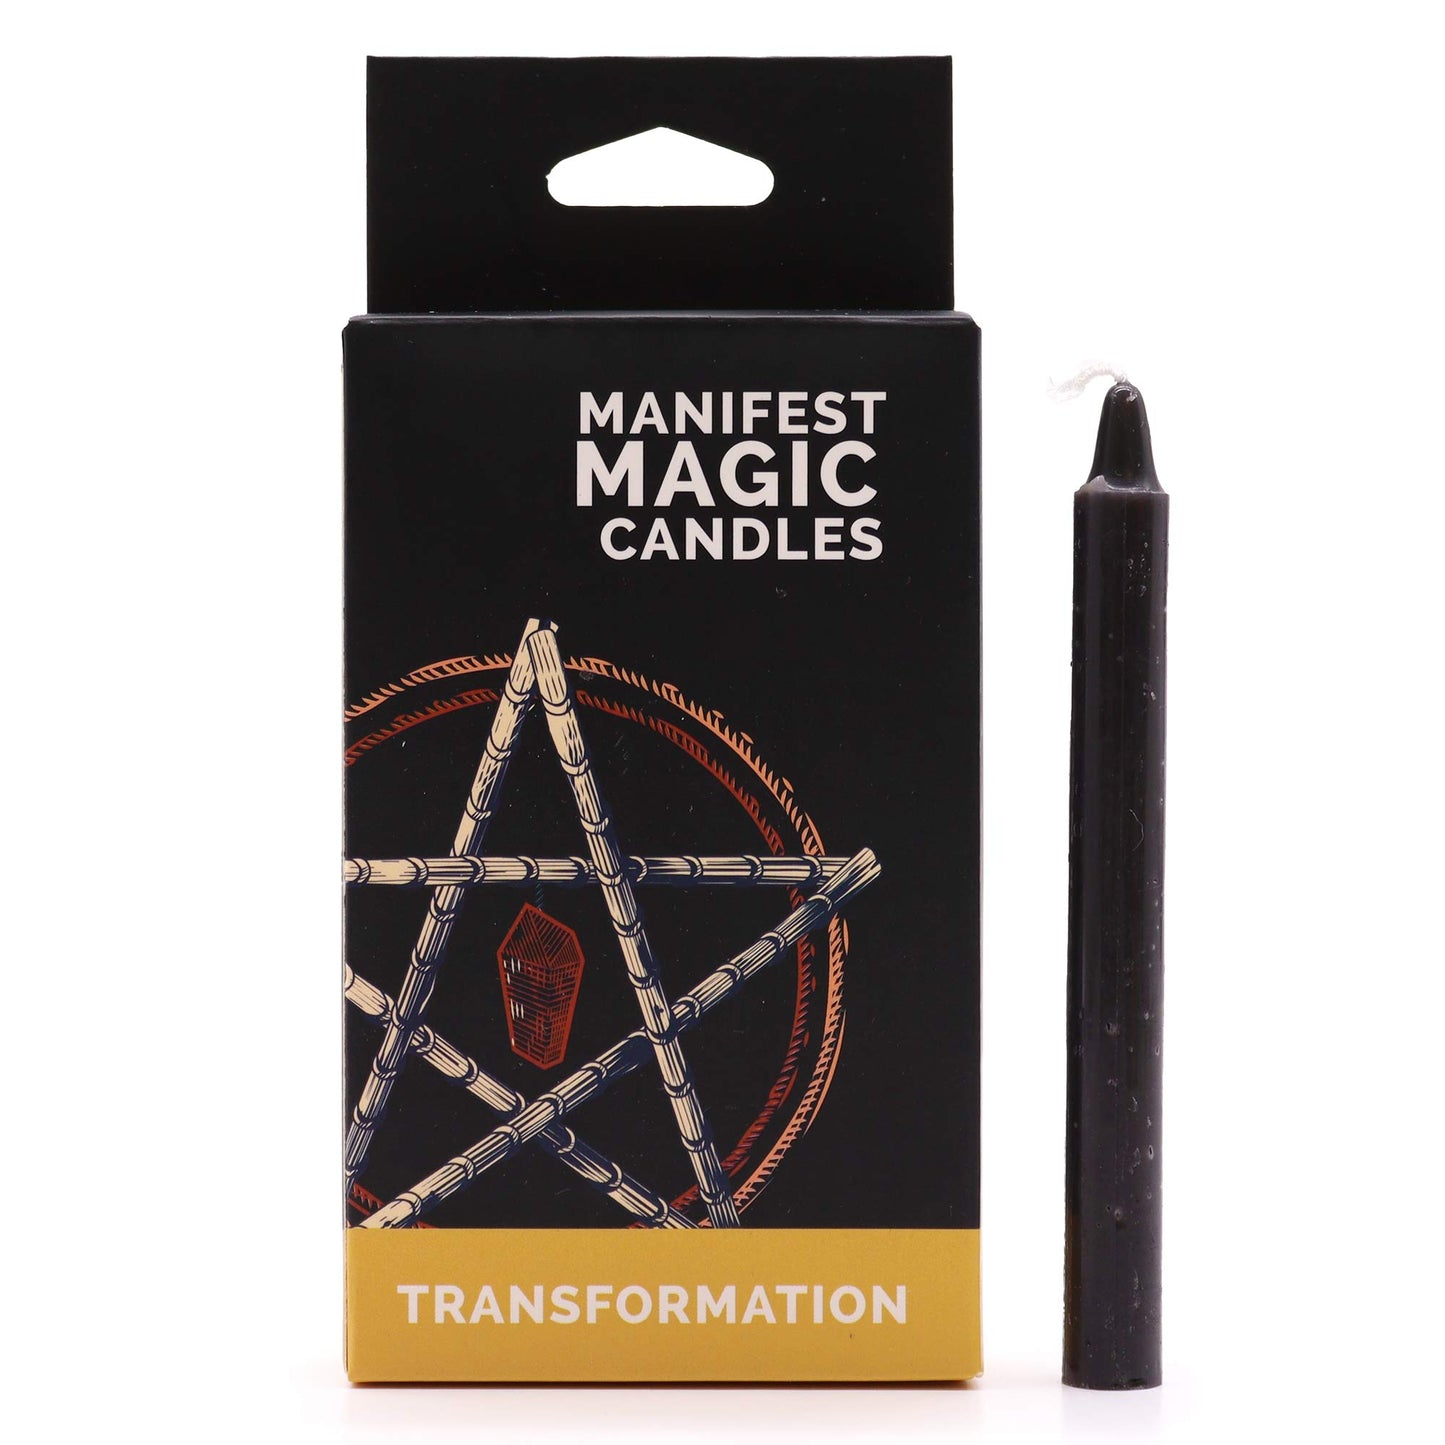 Manifest Magic Candles Black | Set of 12 | Transformation | Soy Wax